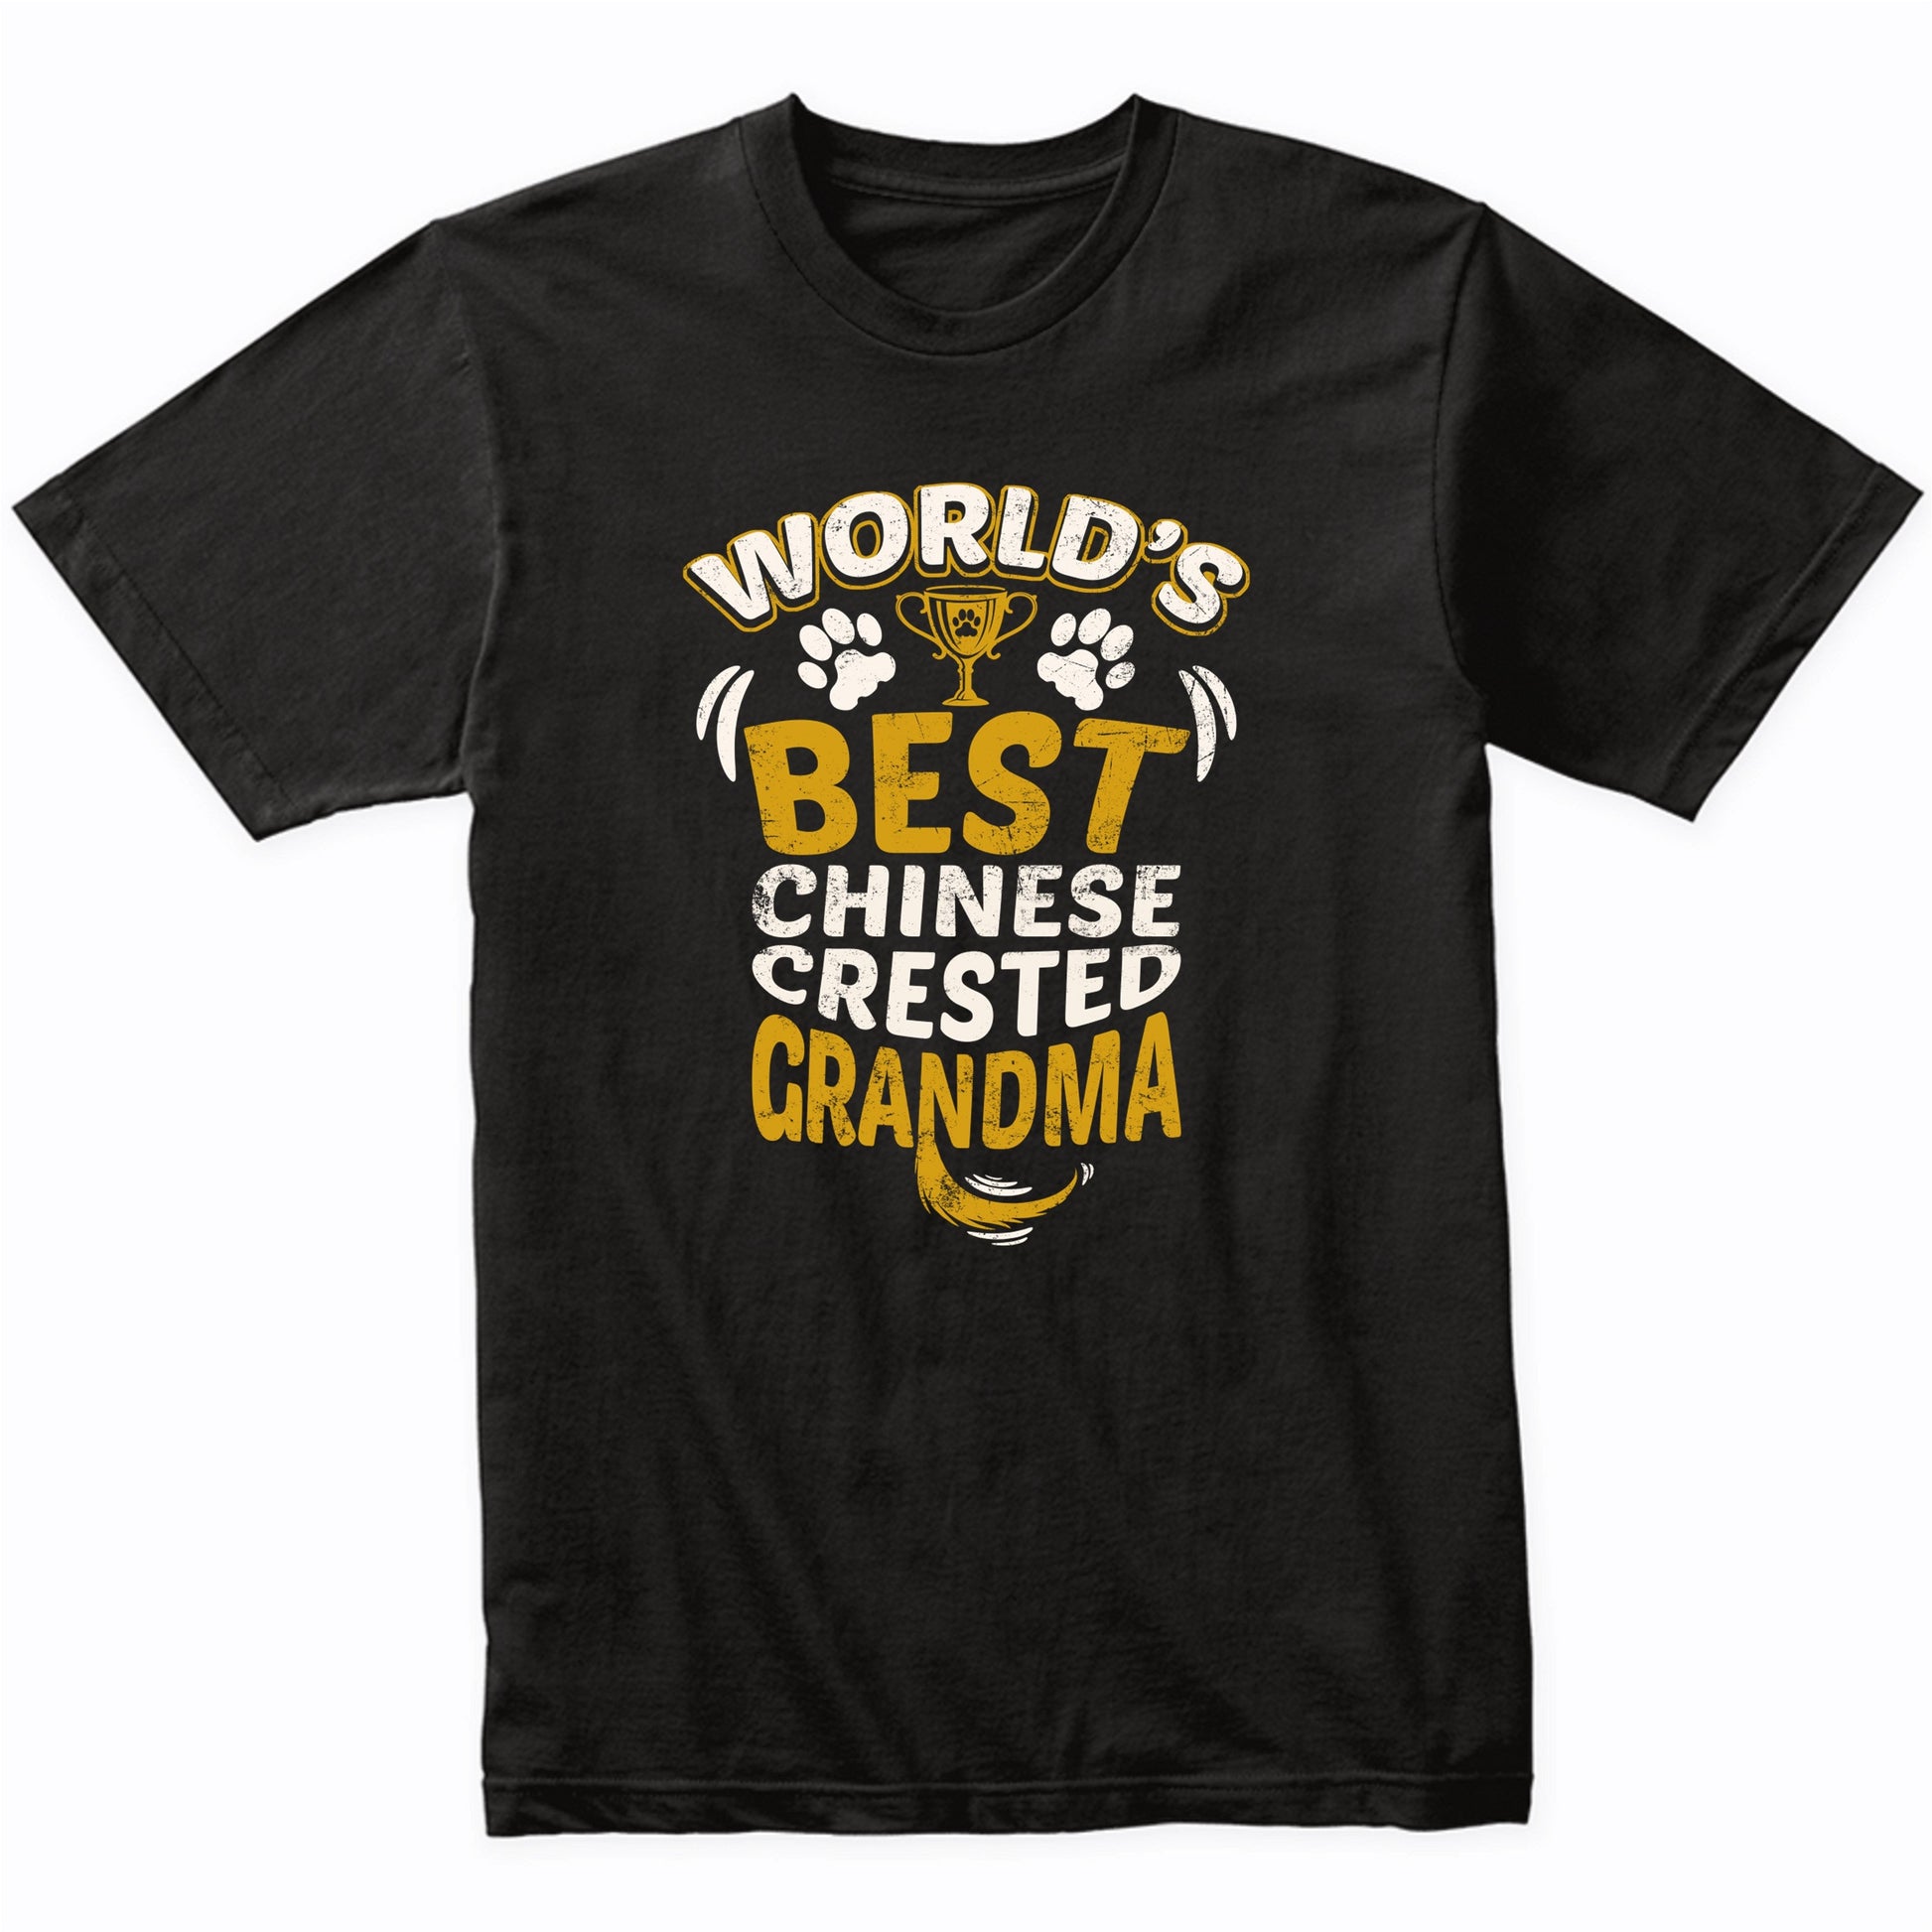 World's Best Chinese Crested Grandma Graphic T-Shirt